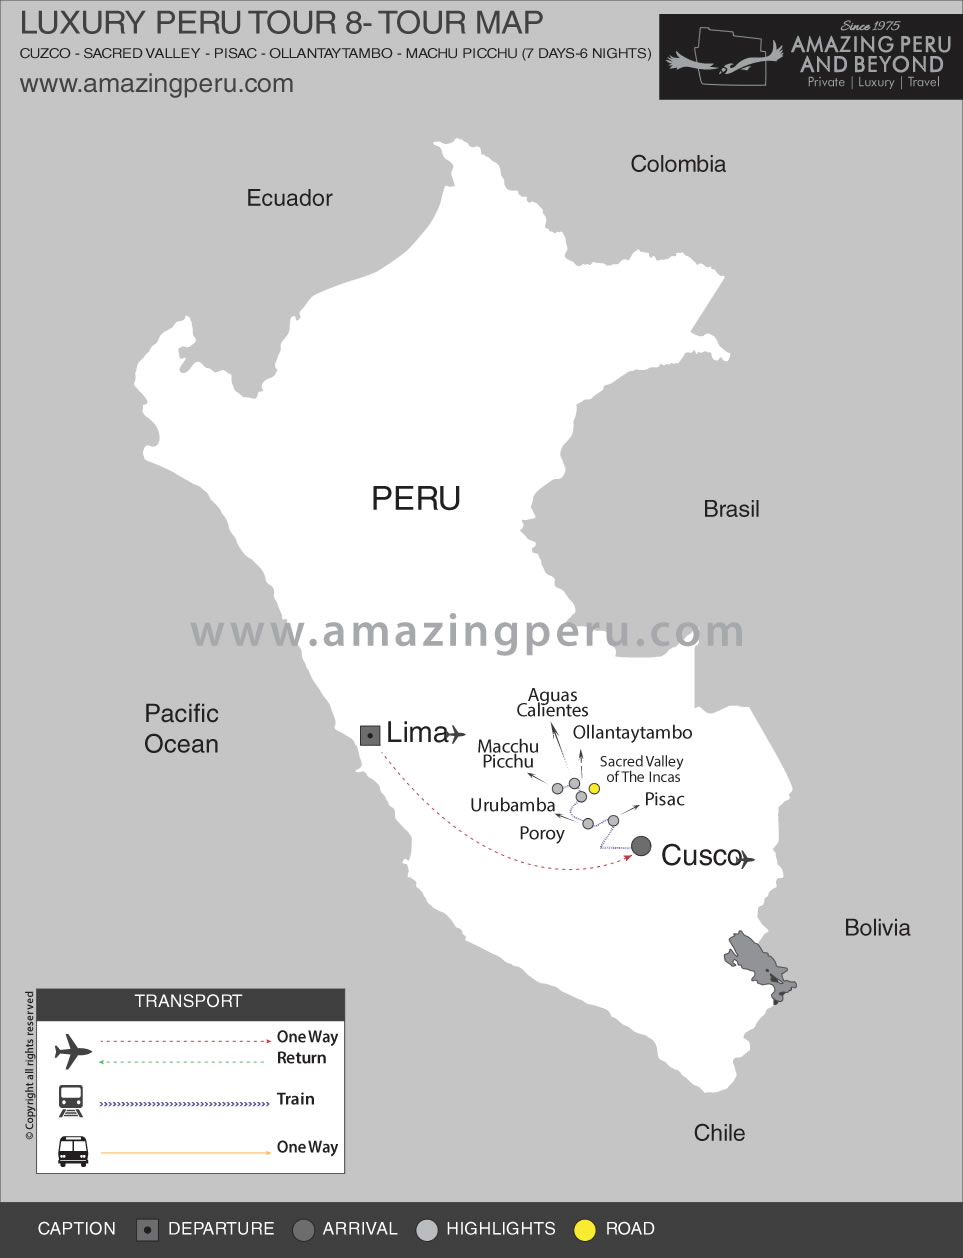 Luxury Peru Tour: Land of the Incas - 7 days / 6 nights.